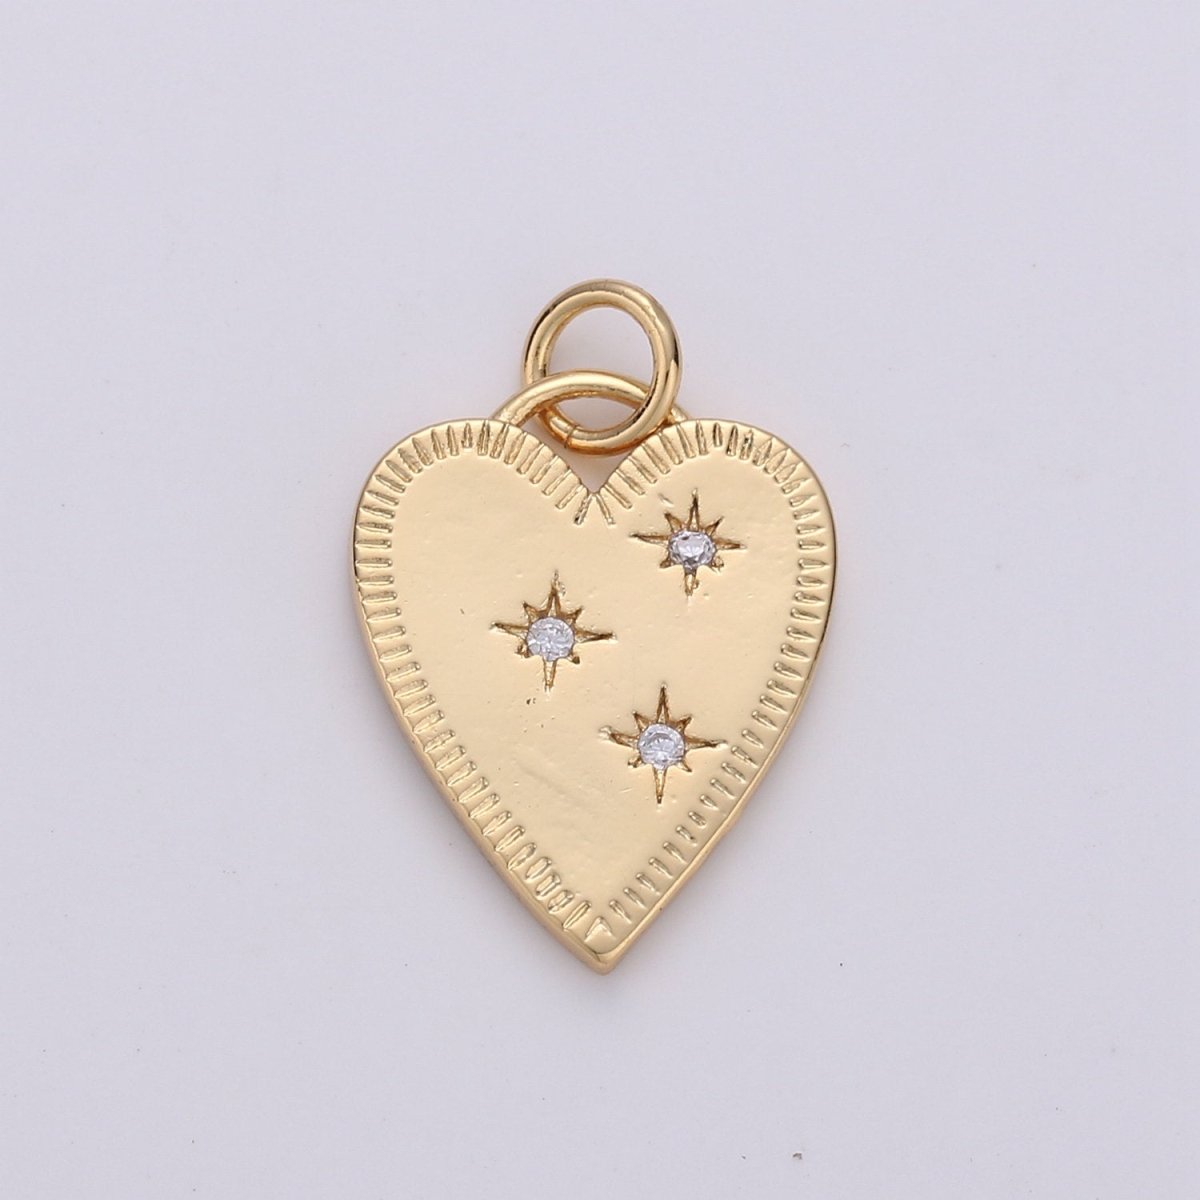 14k Gold Filled Heart Charm Medallion Pendant, Gold Necklace Pendant for Necklace Bracelet Charm Component Supply D-049 D-161 - DLUXCA